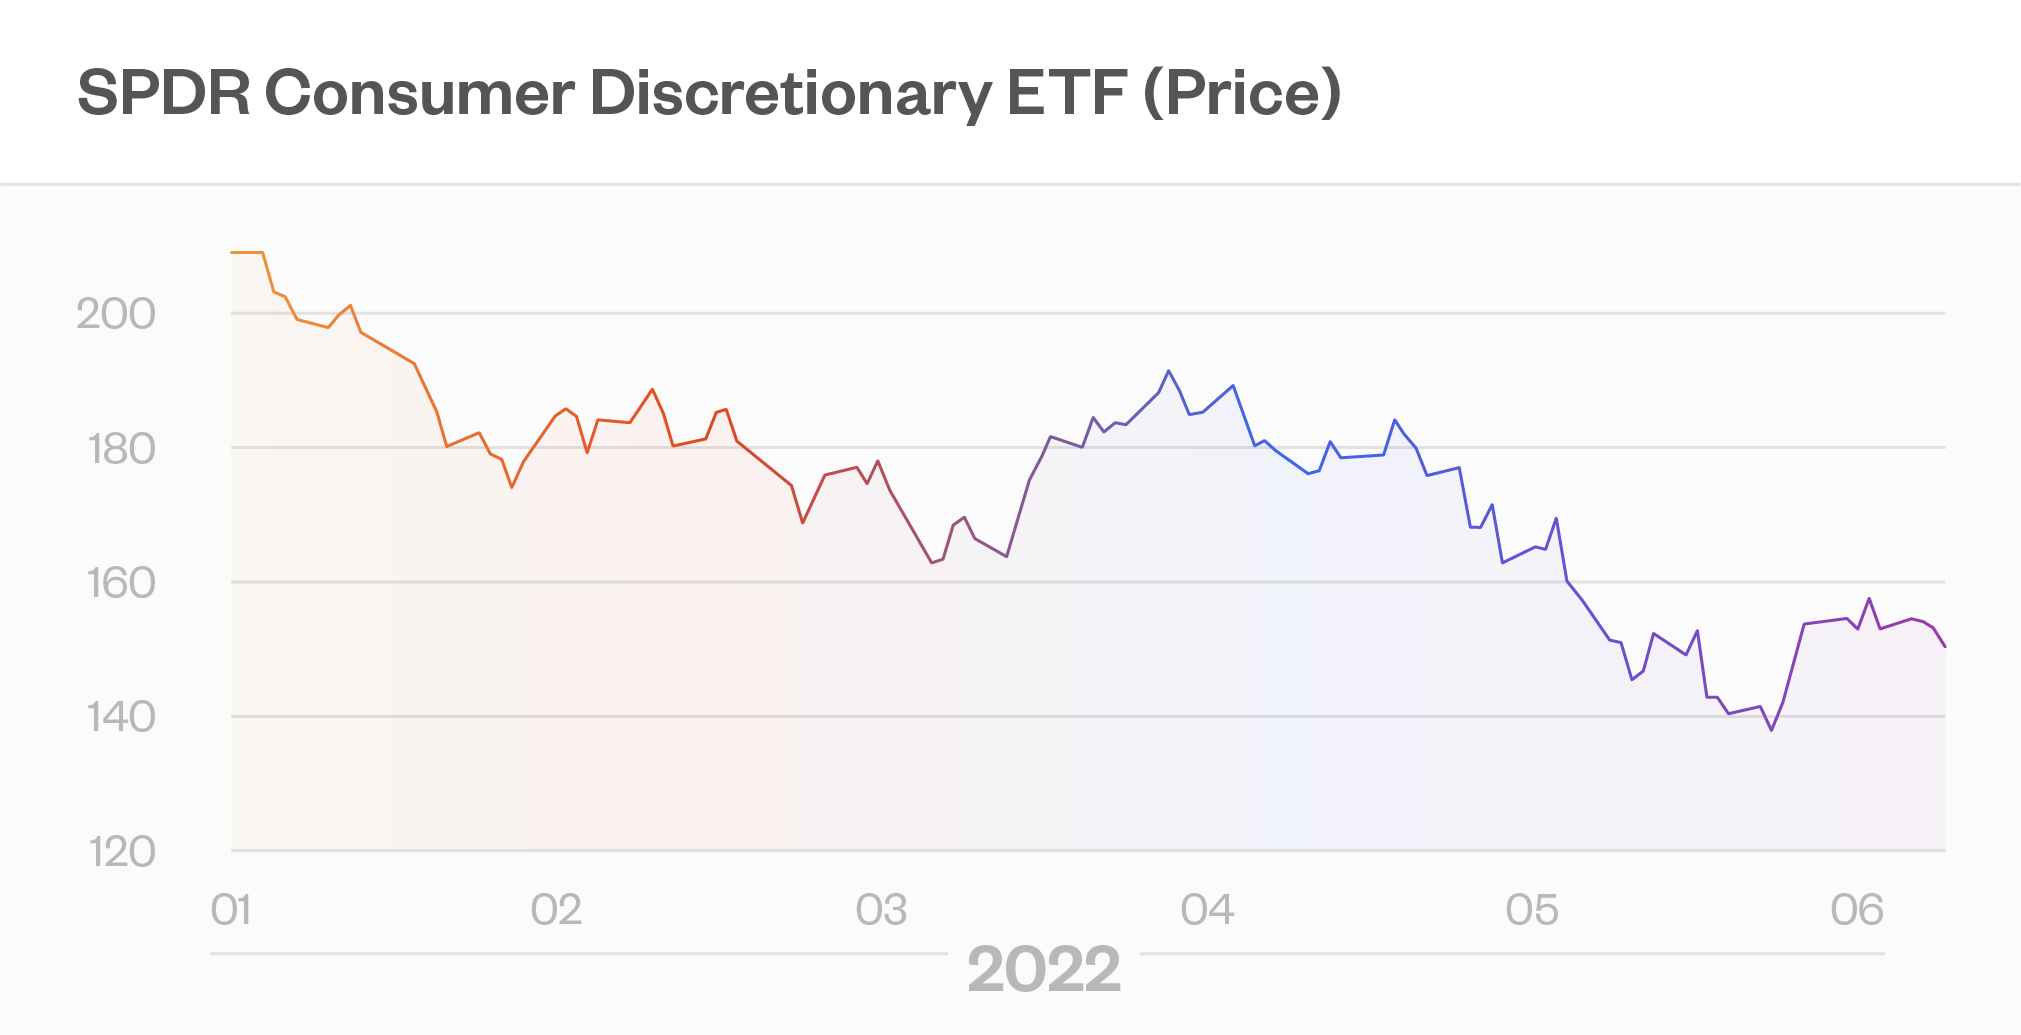 SPDR Consumer Discretionary ETF (Price)